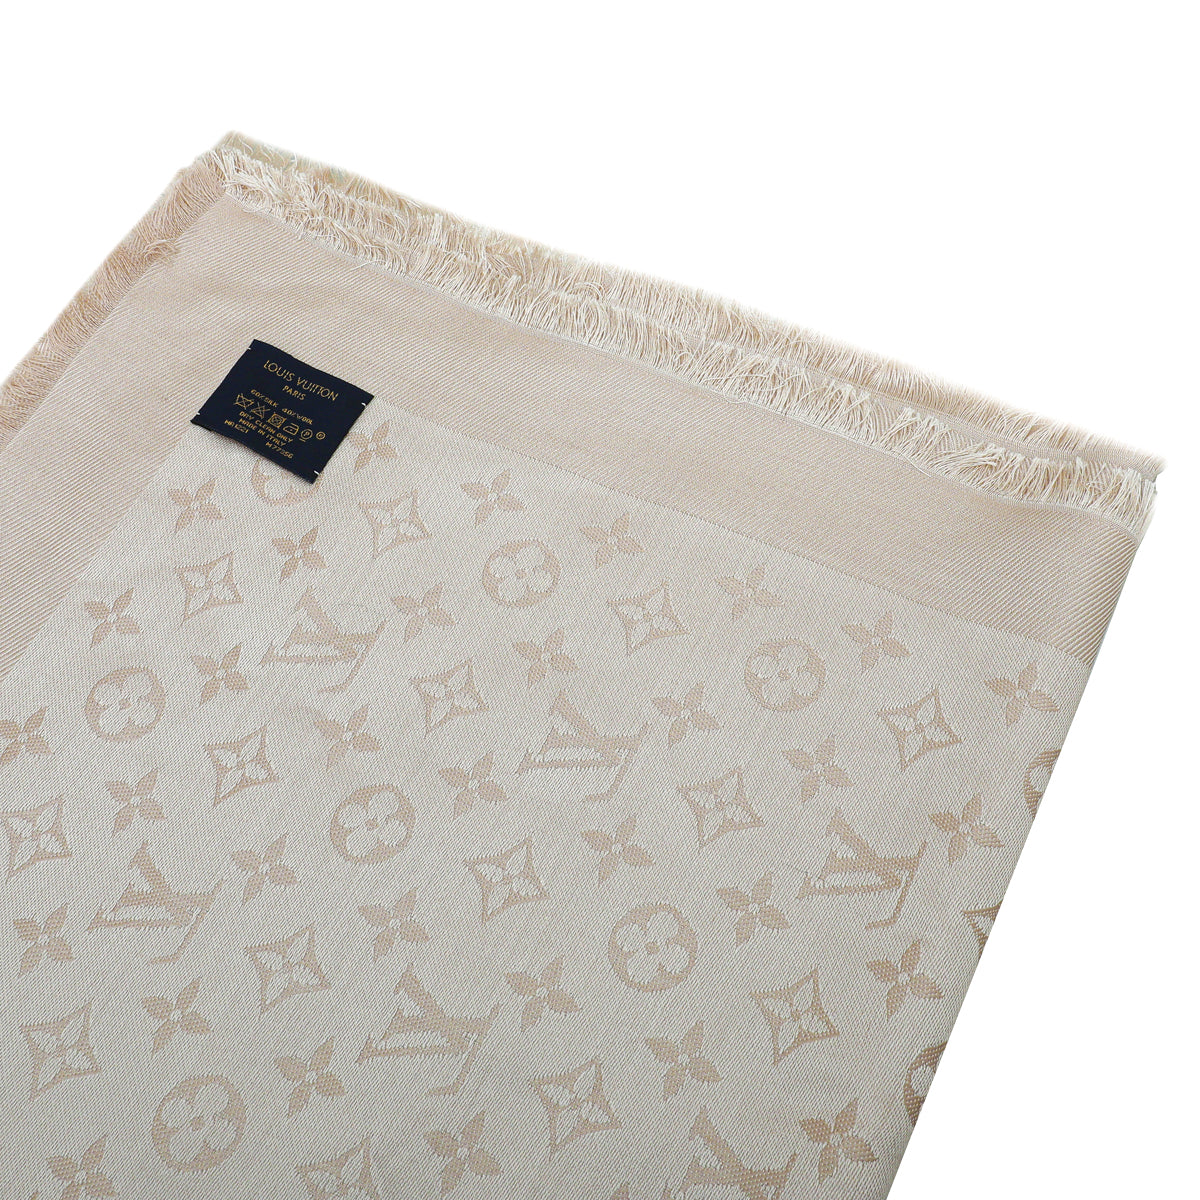 Coquette: Louis Vuitton Limited Edition Anniversary Chale Monogram Scarves